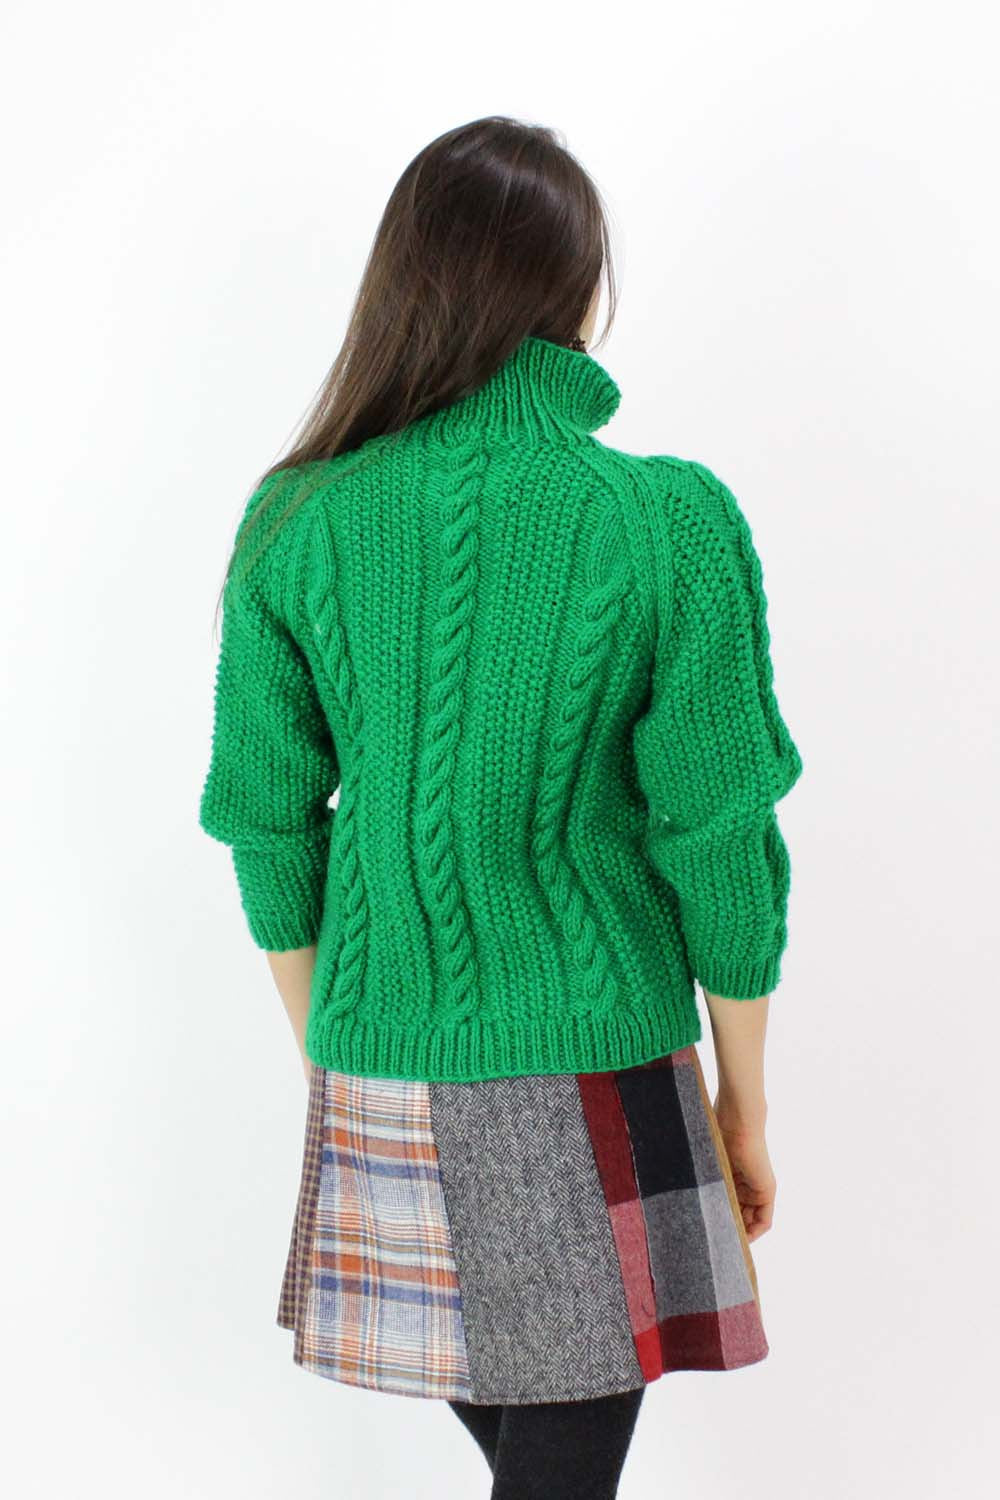 Greener Than Green Chunky Knit Sweater S/M